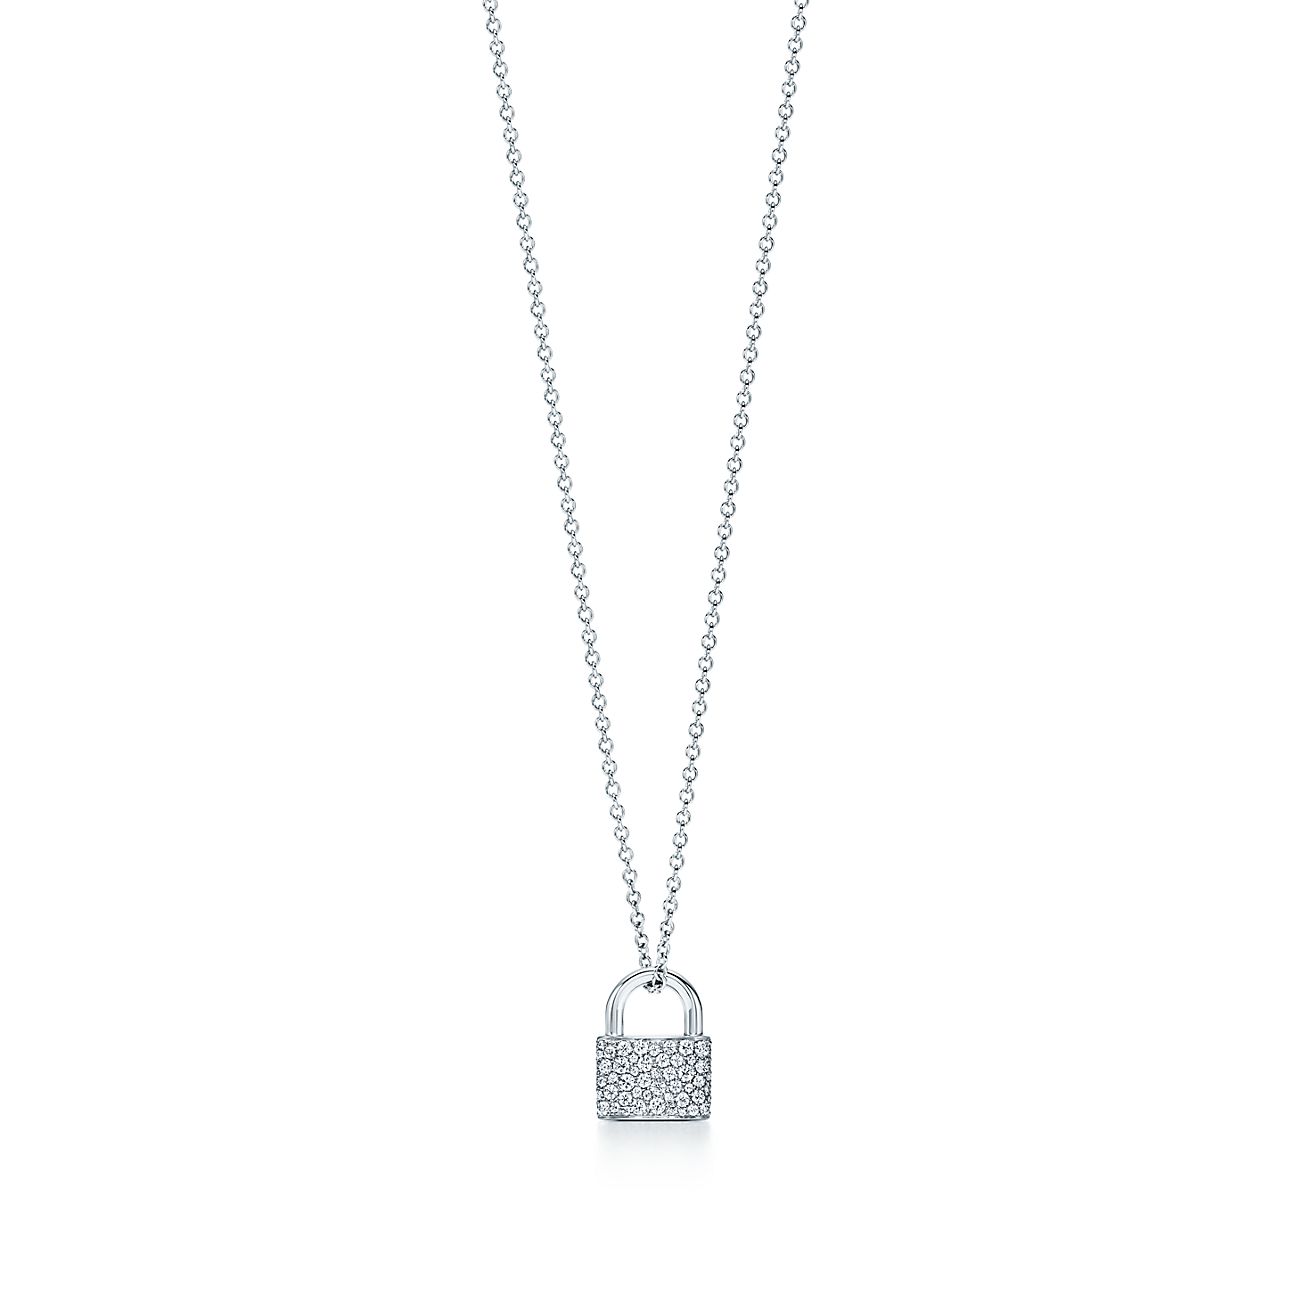 Tiffany HardWear lock pendant in 18k 